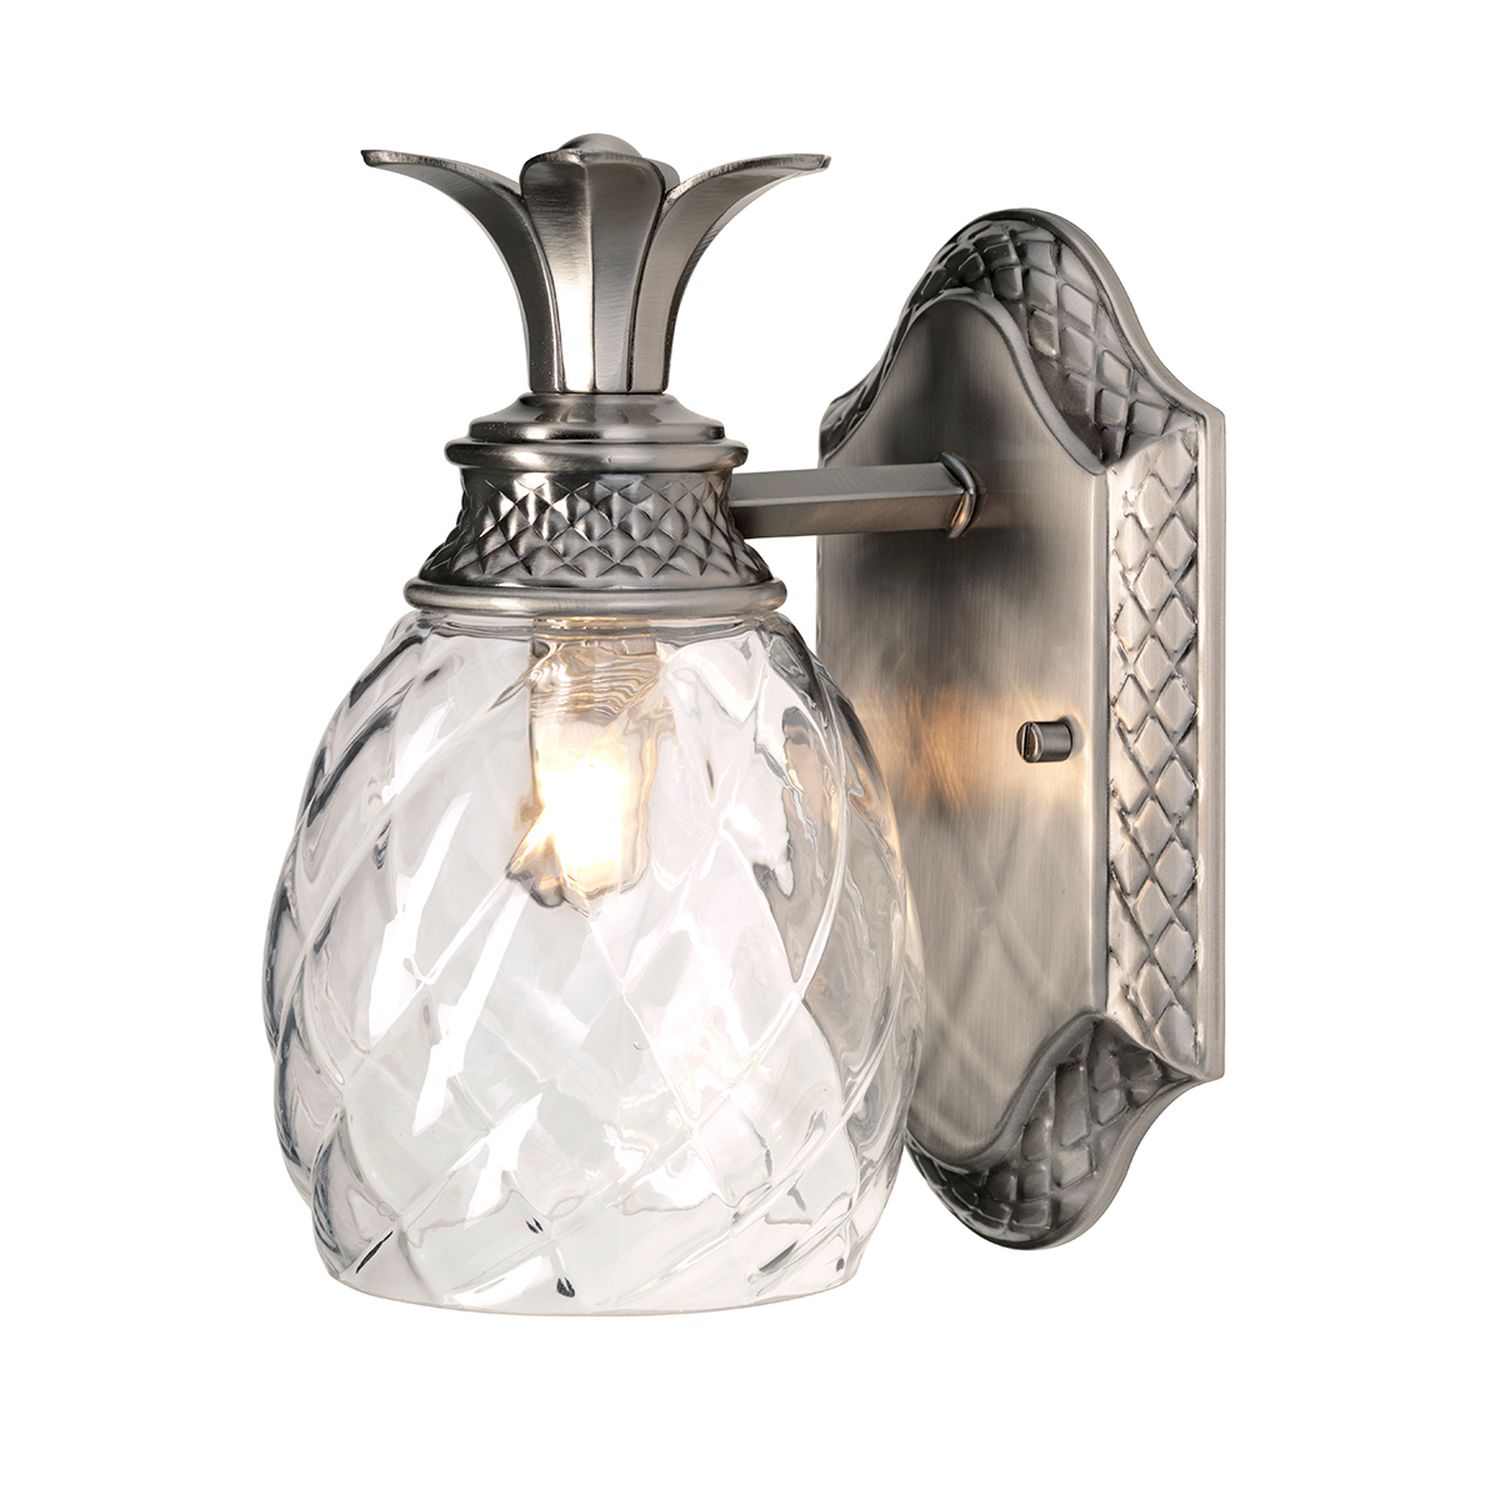 Design Badlampe IP44 dekorativ Glas Schirm LED